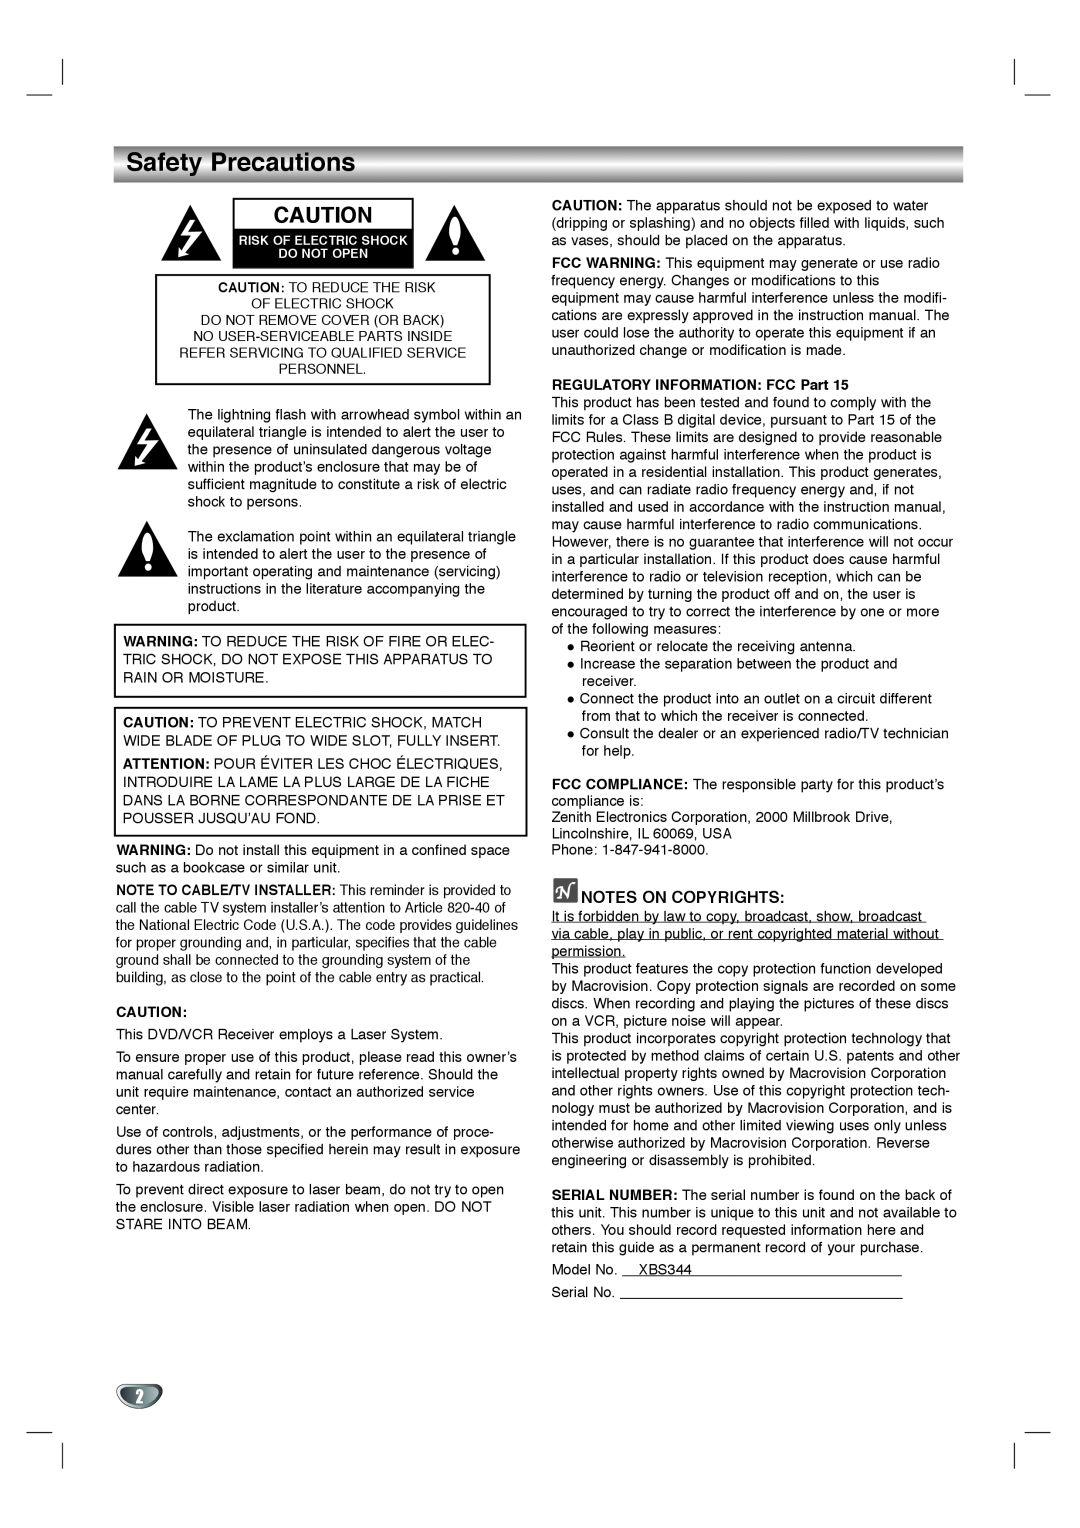 Zenith XBS344 warranty Safety Precautions, Notes On Copyrights, REGULATORY INFORMATION FCC Part 